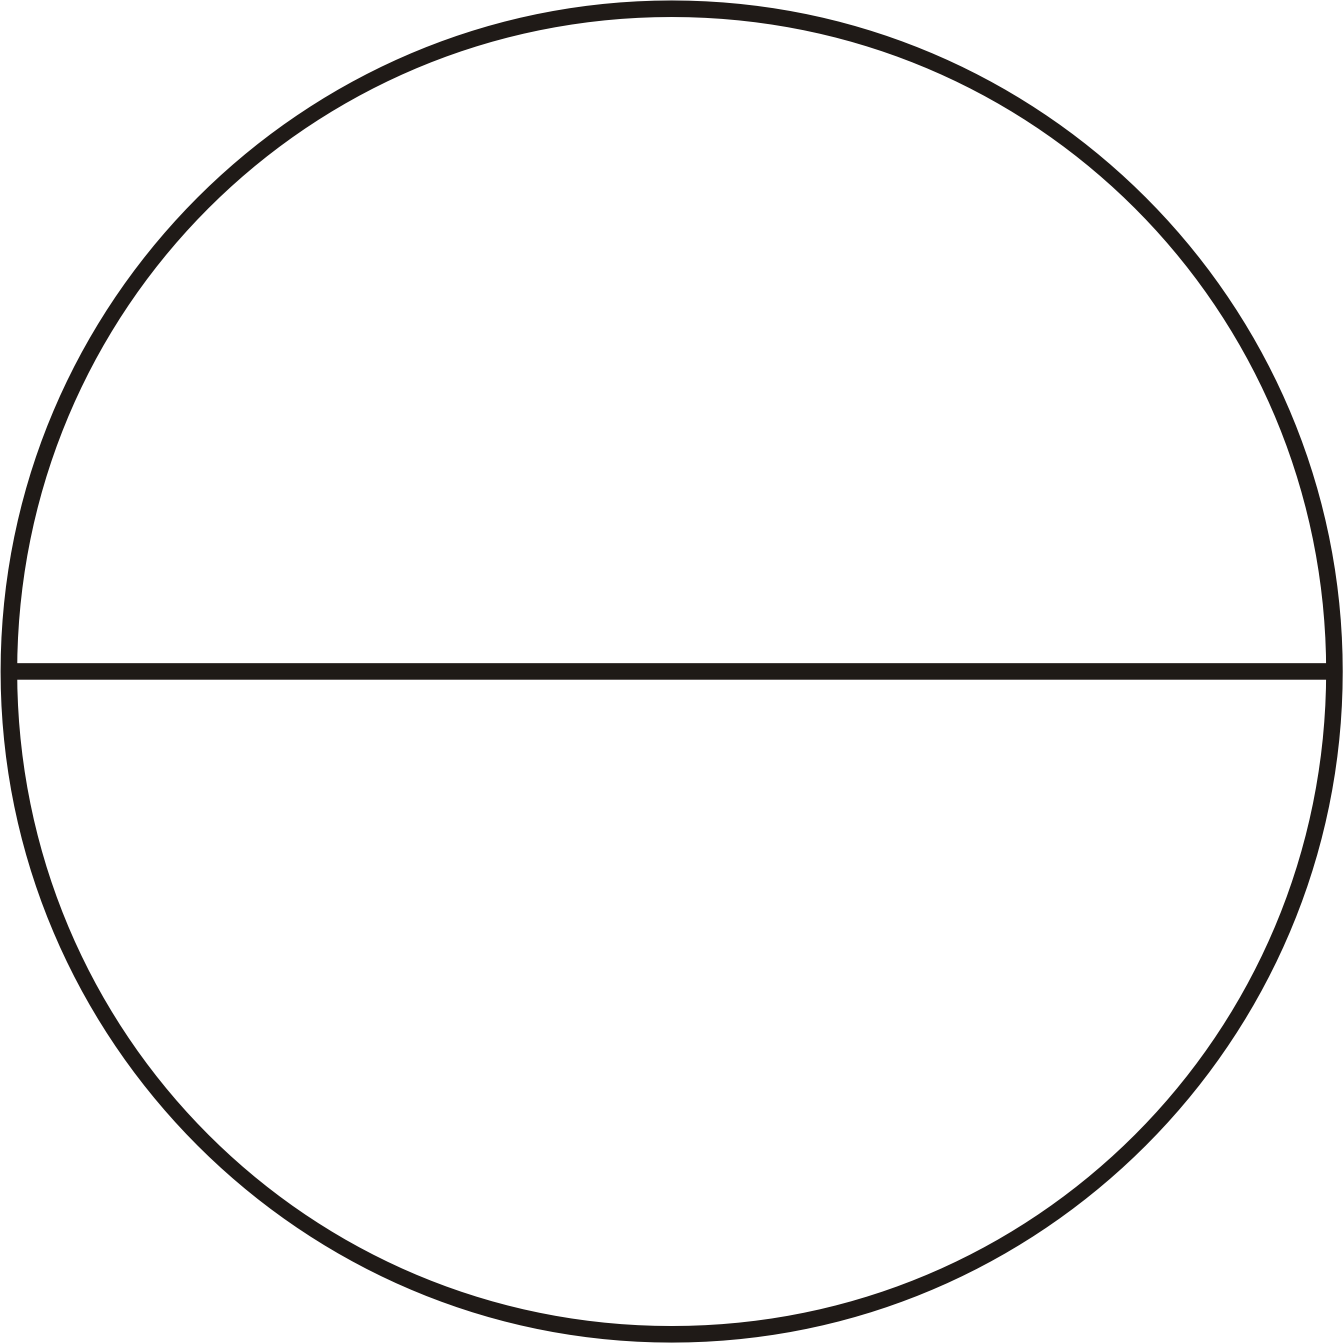 Круг поделенный на 2 части. Круг поделенный на 4 части. Rhgeu gjltktysq YF 4 xfcnb. Круг разделенный на части.